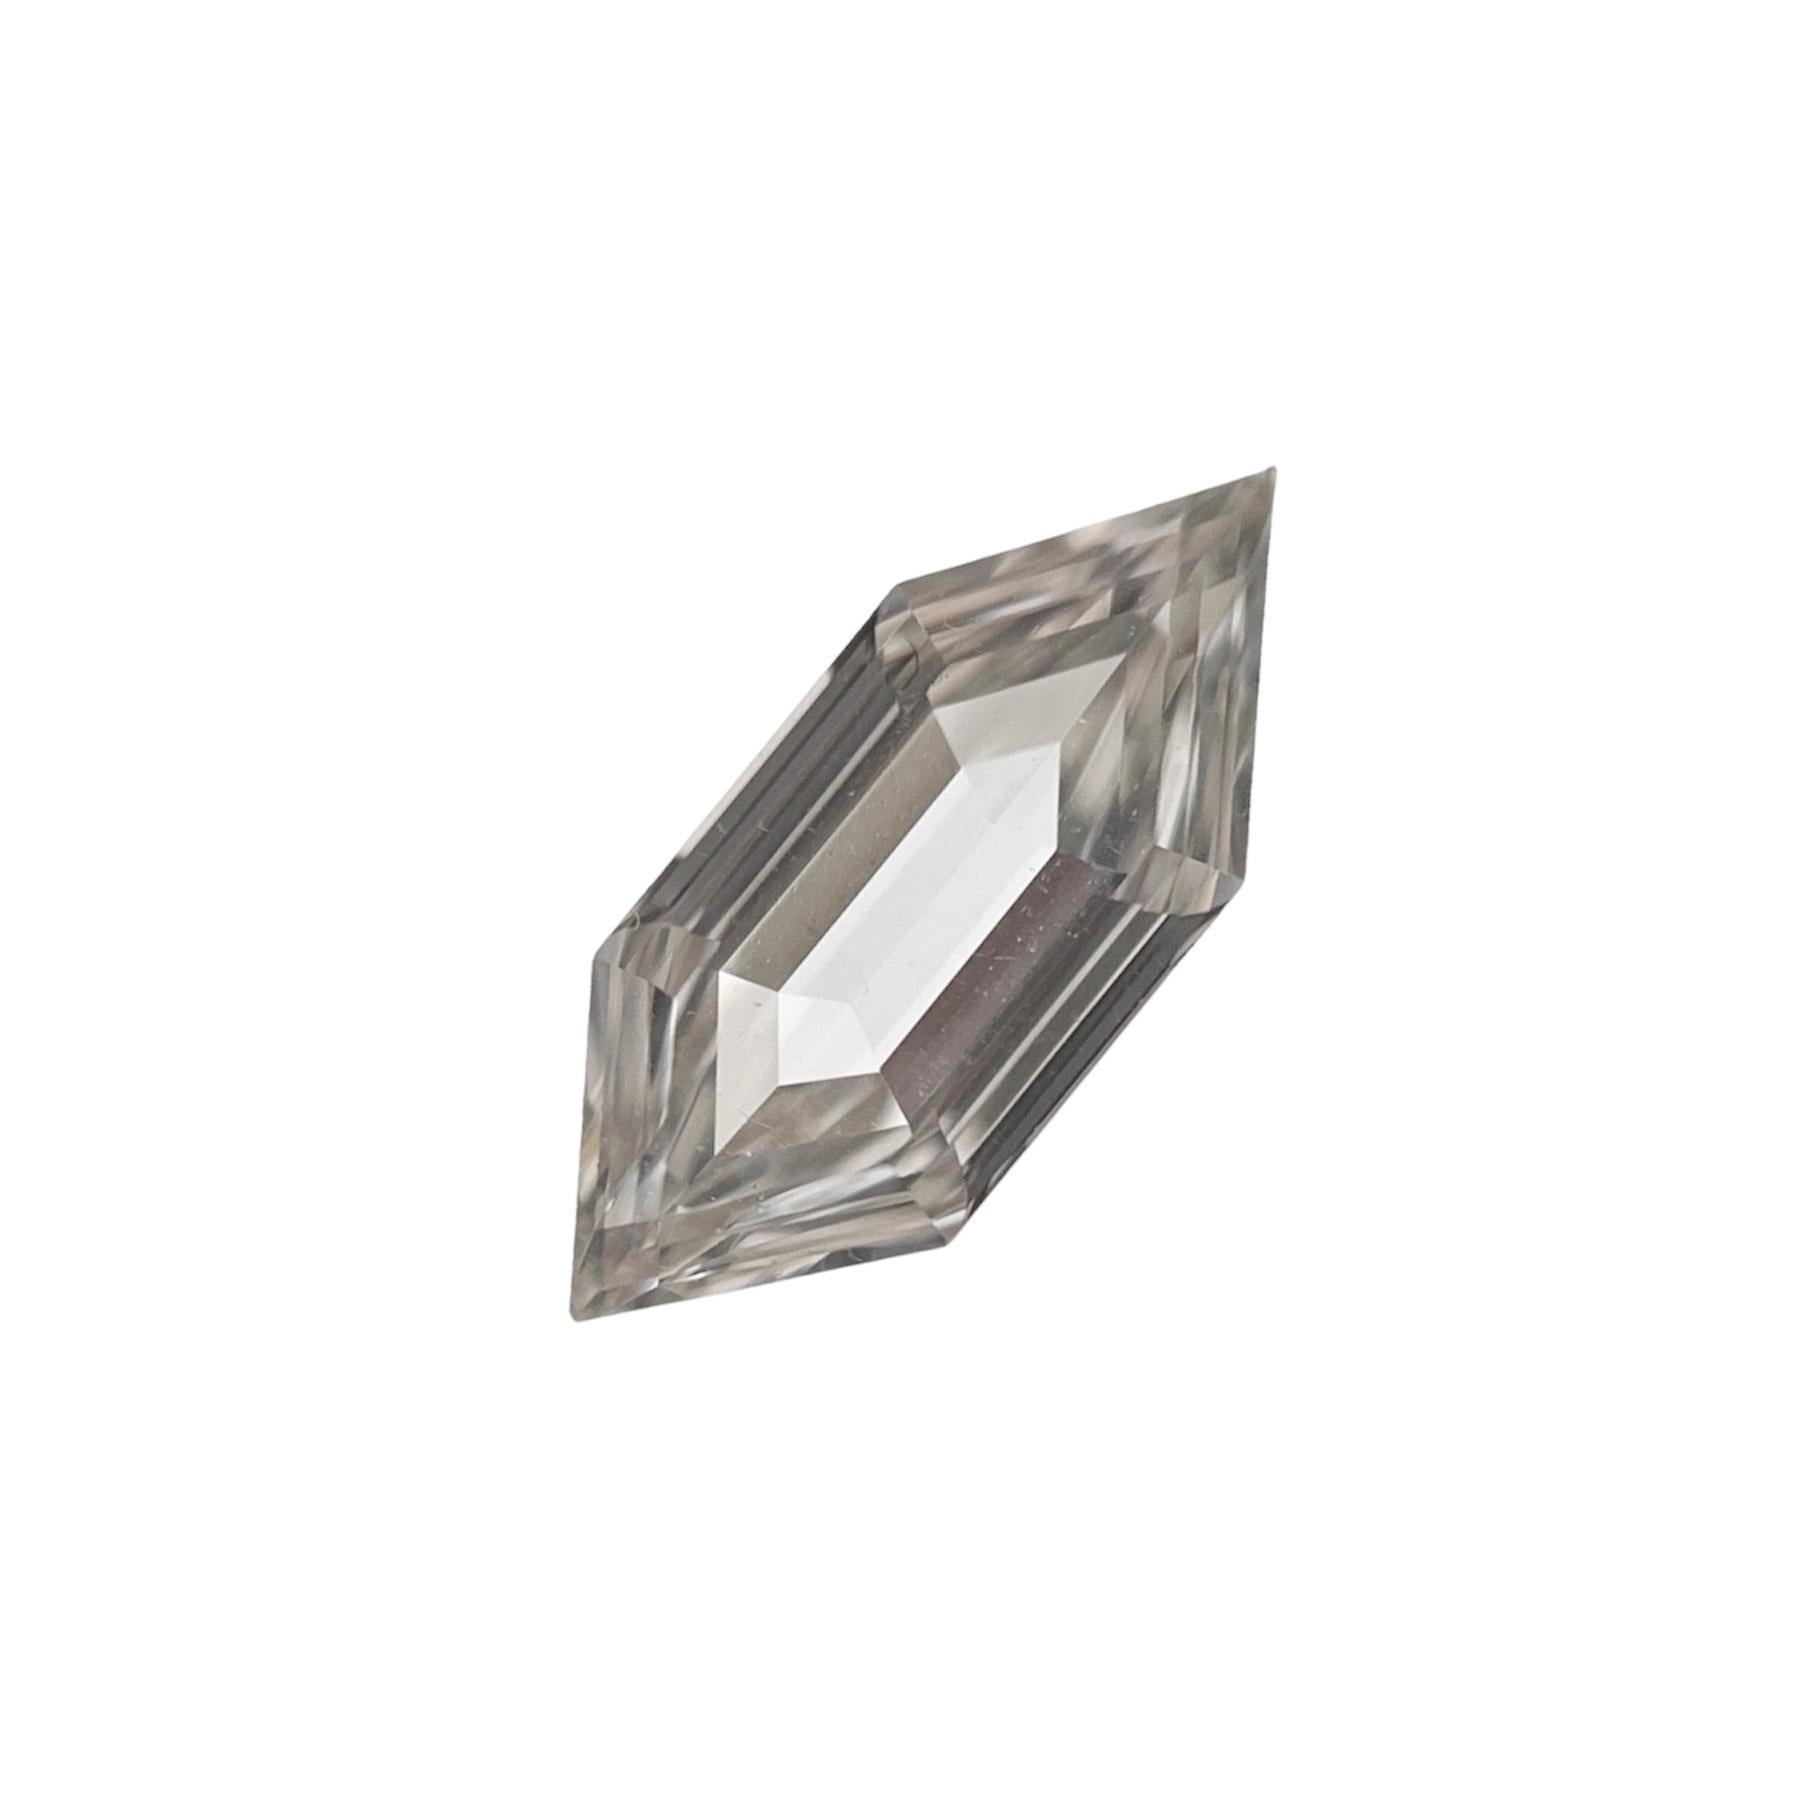 ITEM DESCRIPTION

ID #: NYC57476
Stone Shape: Hexagonal 
Diamond Weight: 0.70 Carat
Clarity: VS2
Color: L
Cut:	Excellent
Measurements: 9.82x 4.21x 2.22mm
Depth %: 52.60%
Table %: 	58%
Symmetry: Very
Polish: Good
Fluorescence: None
Certifying Lab: